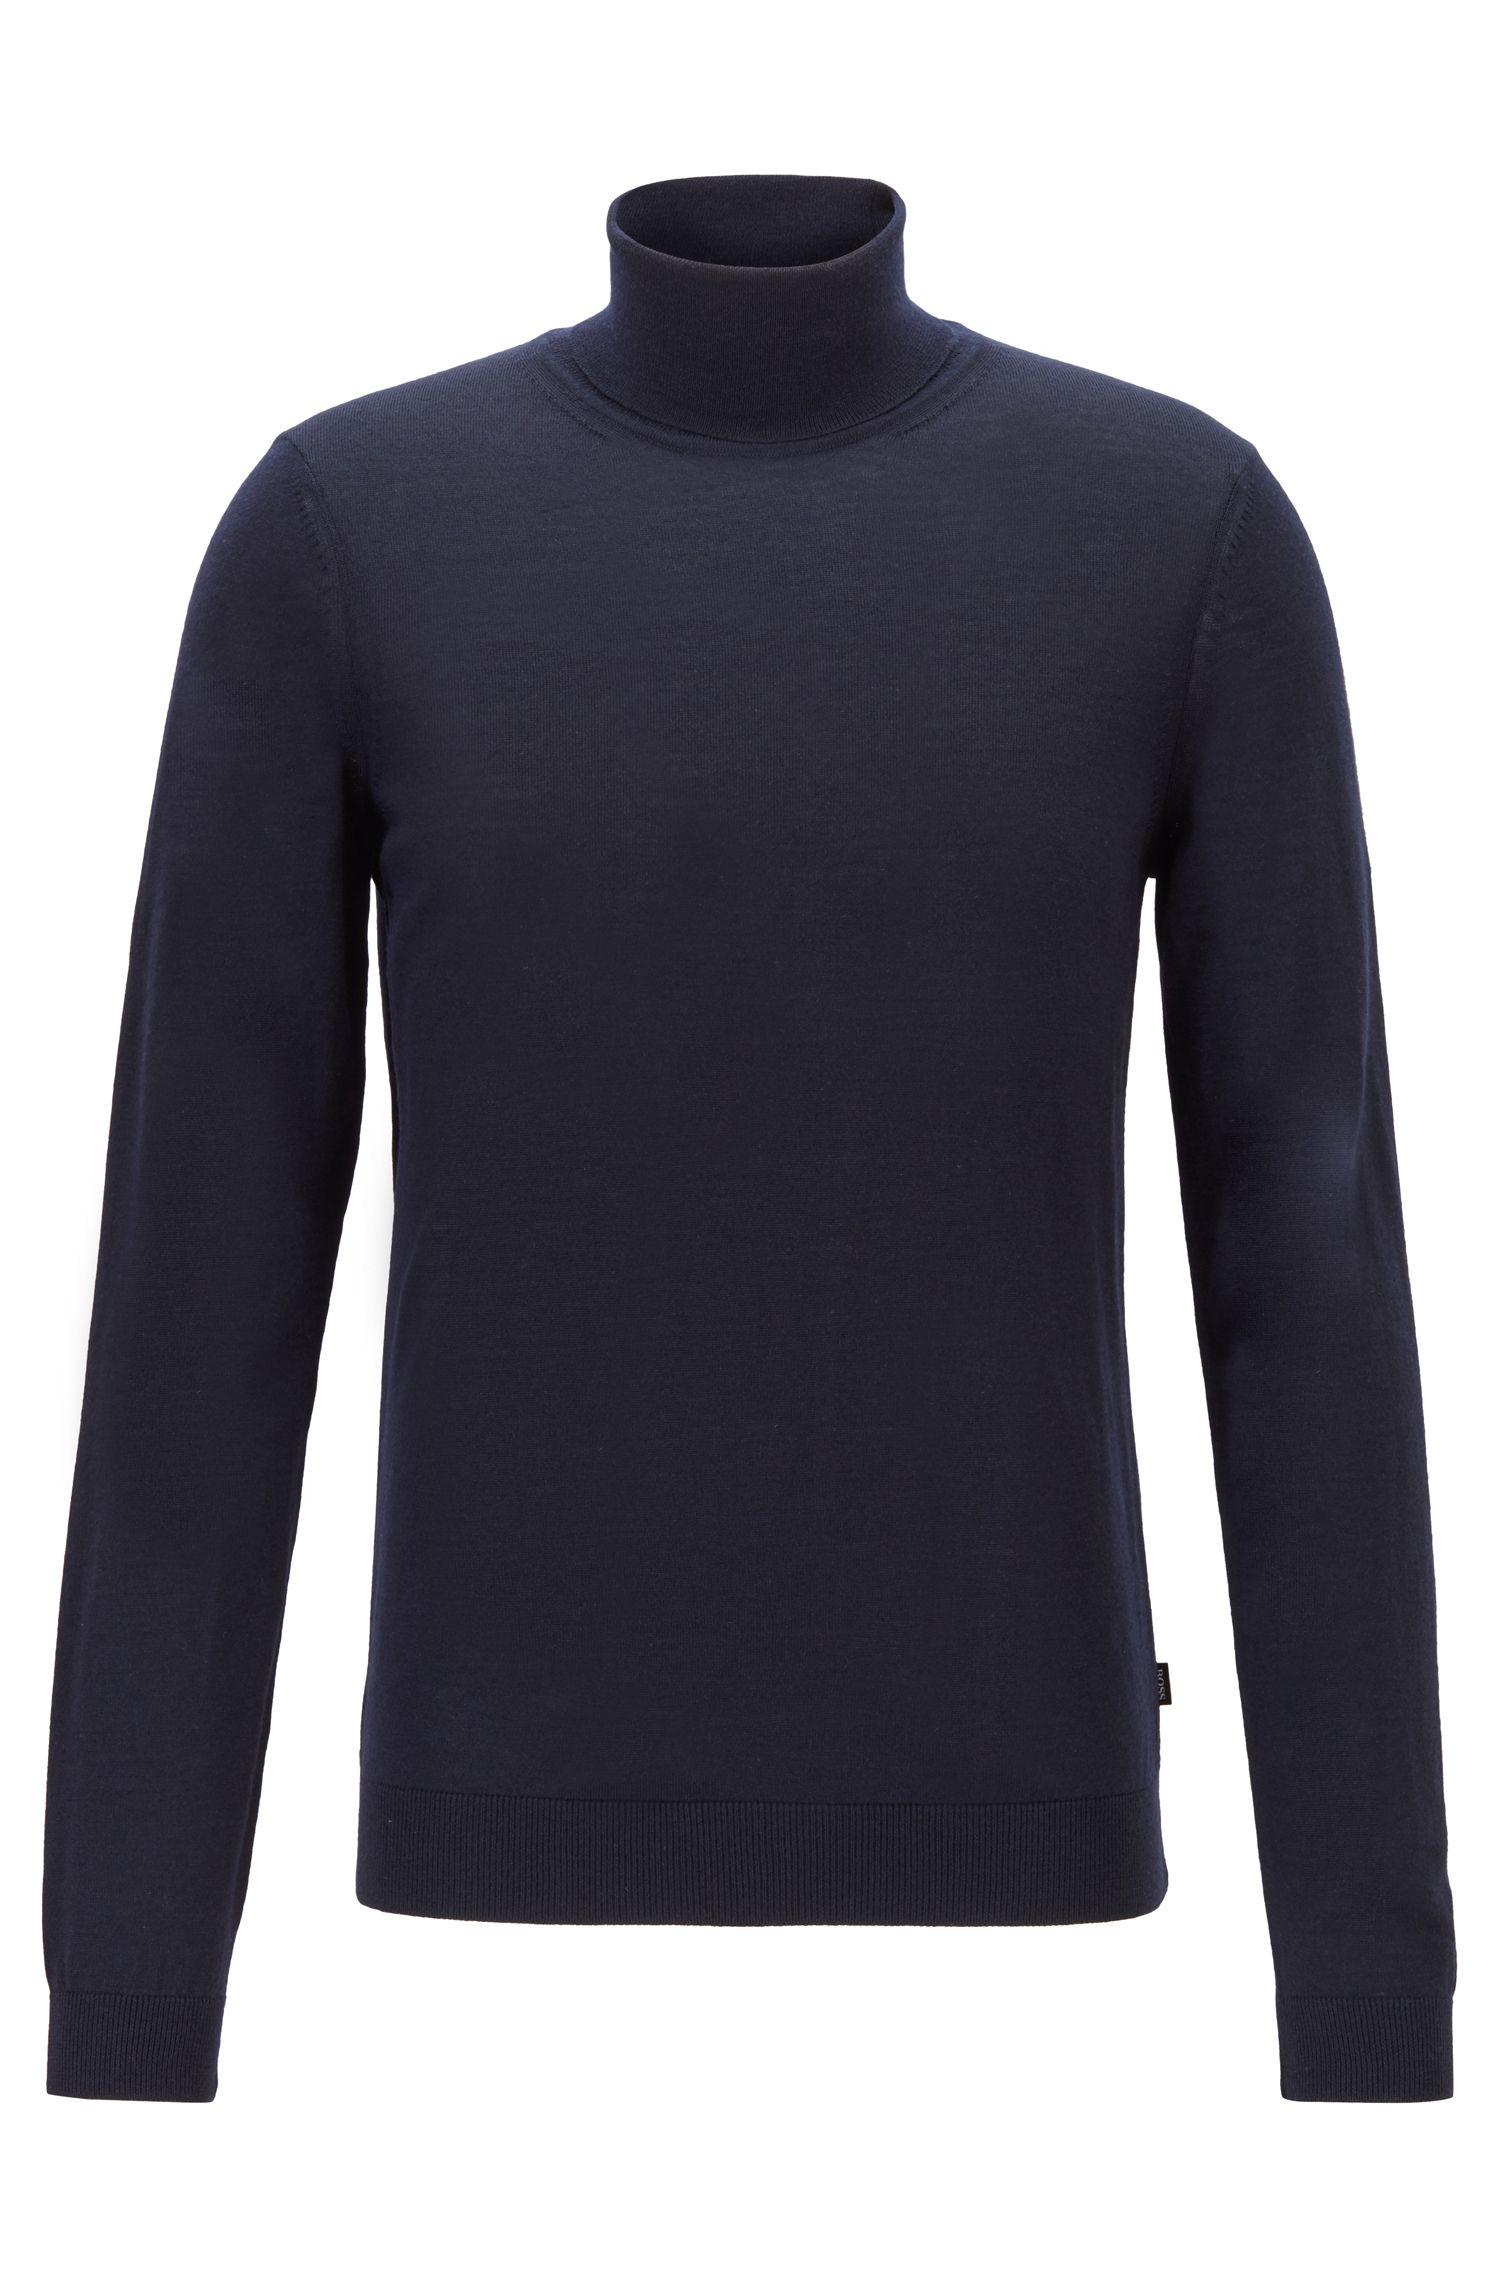 BOSS Wool Musso-p Turtleneck Sweater in Dark Blue (Blue) for Men - Save ...